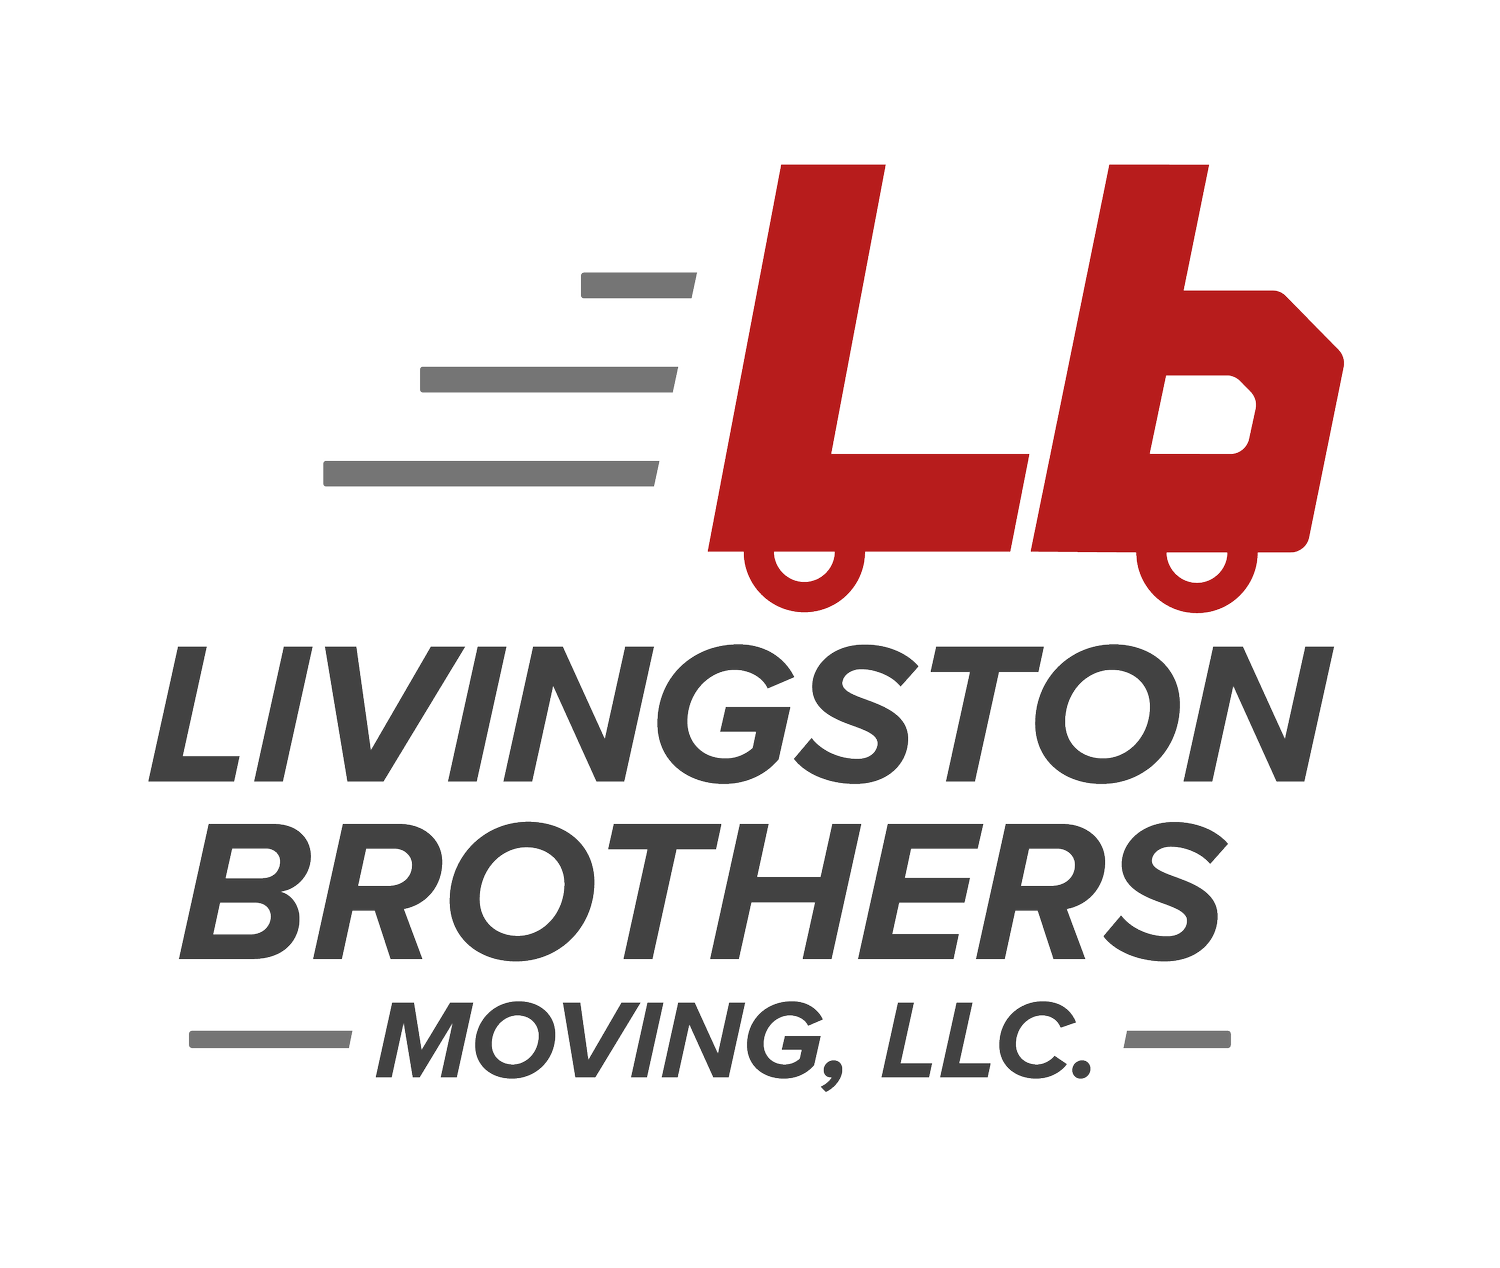 Livingston Brothers Moving, LLC